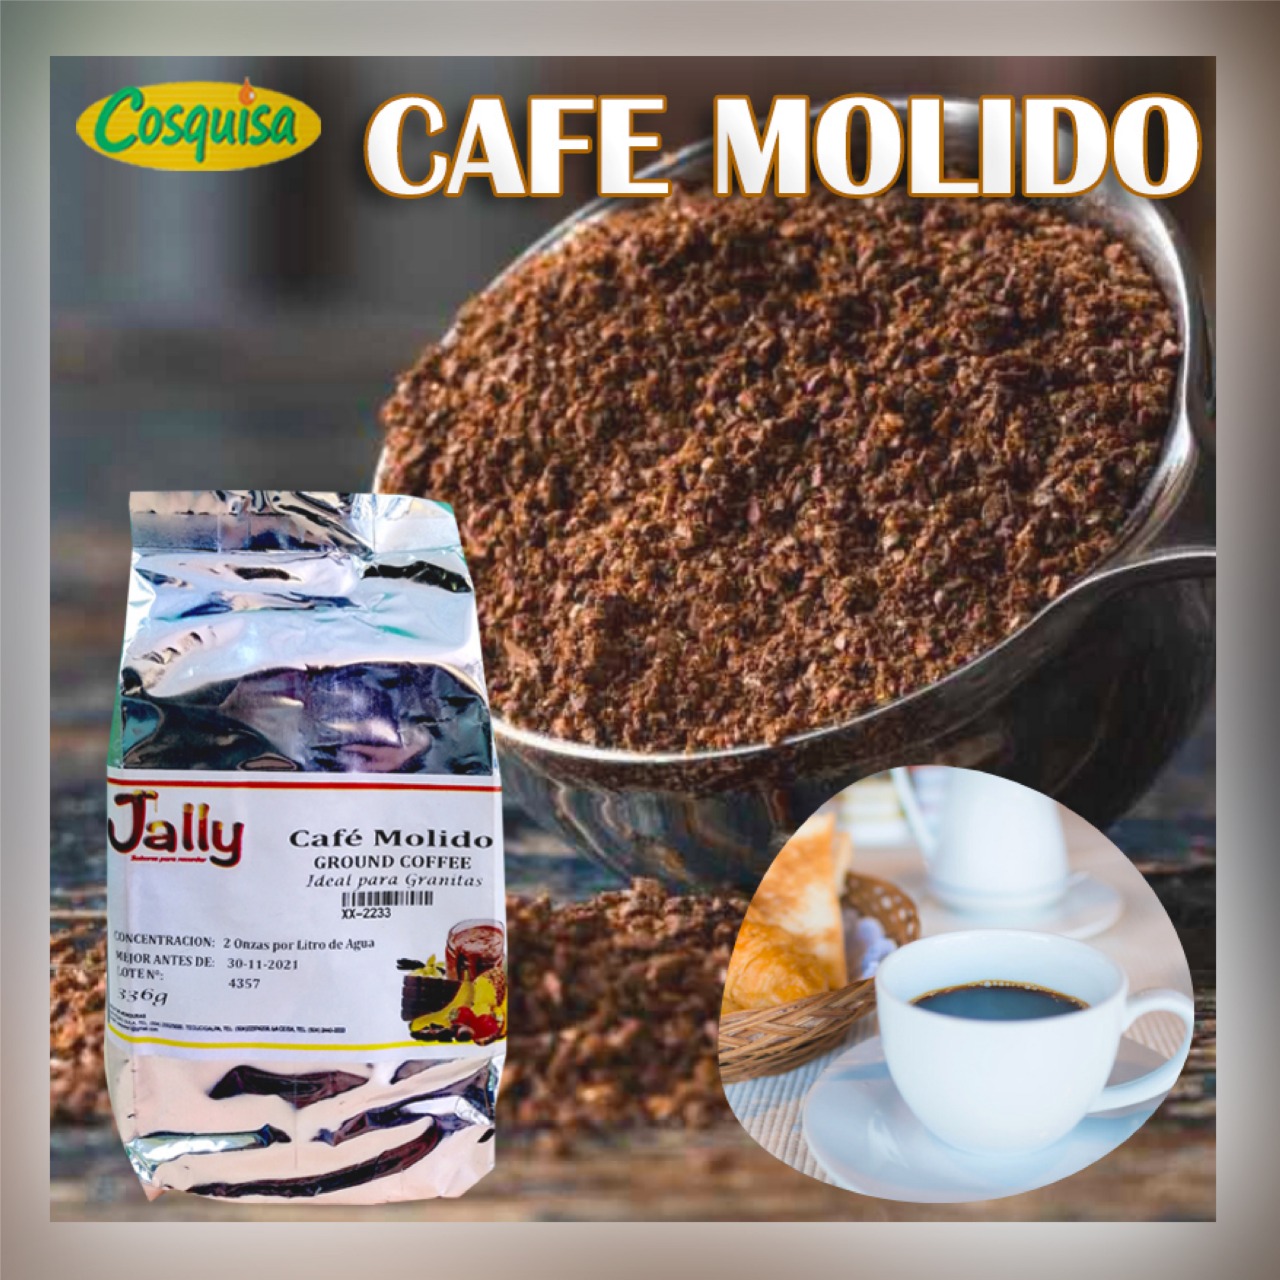 Cafe Molido - cosquisa